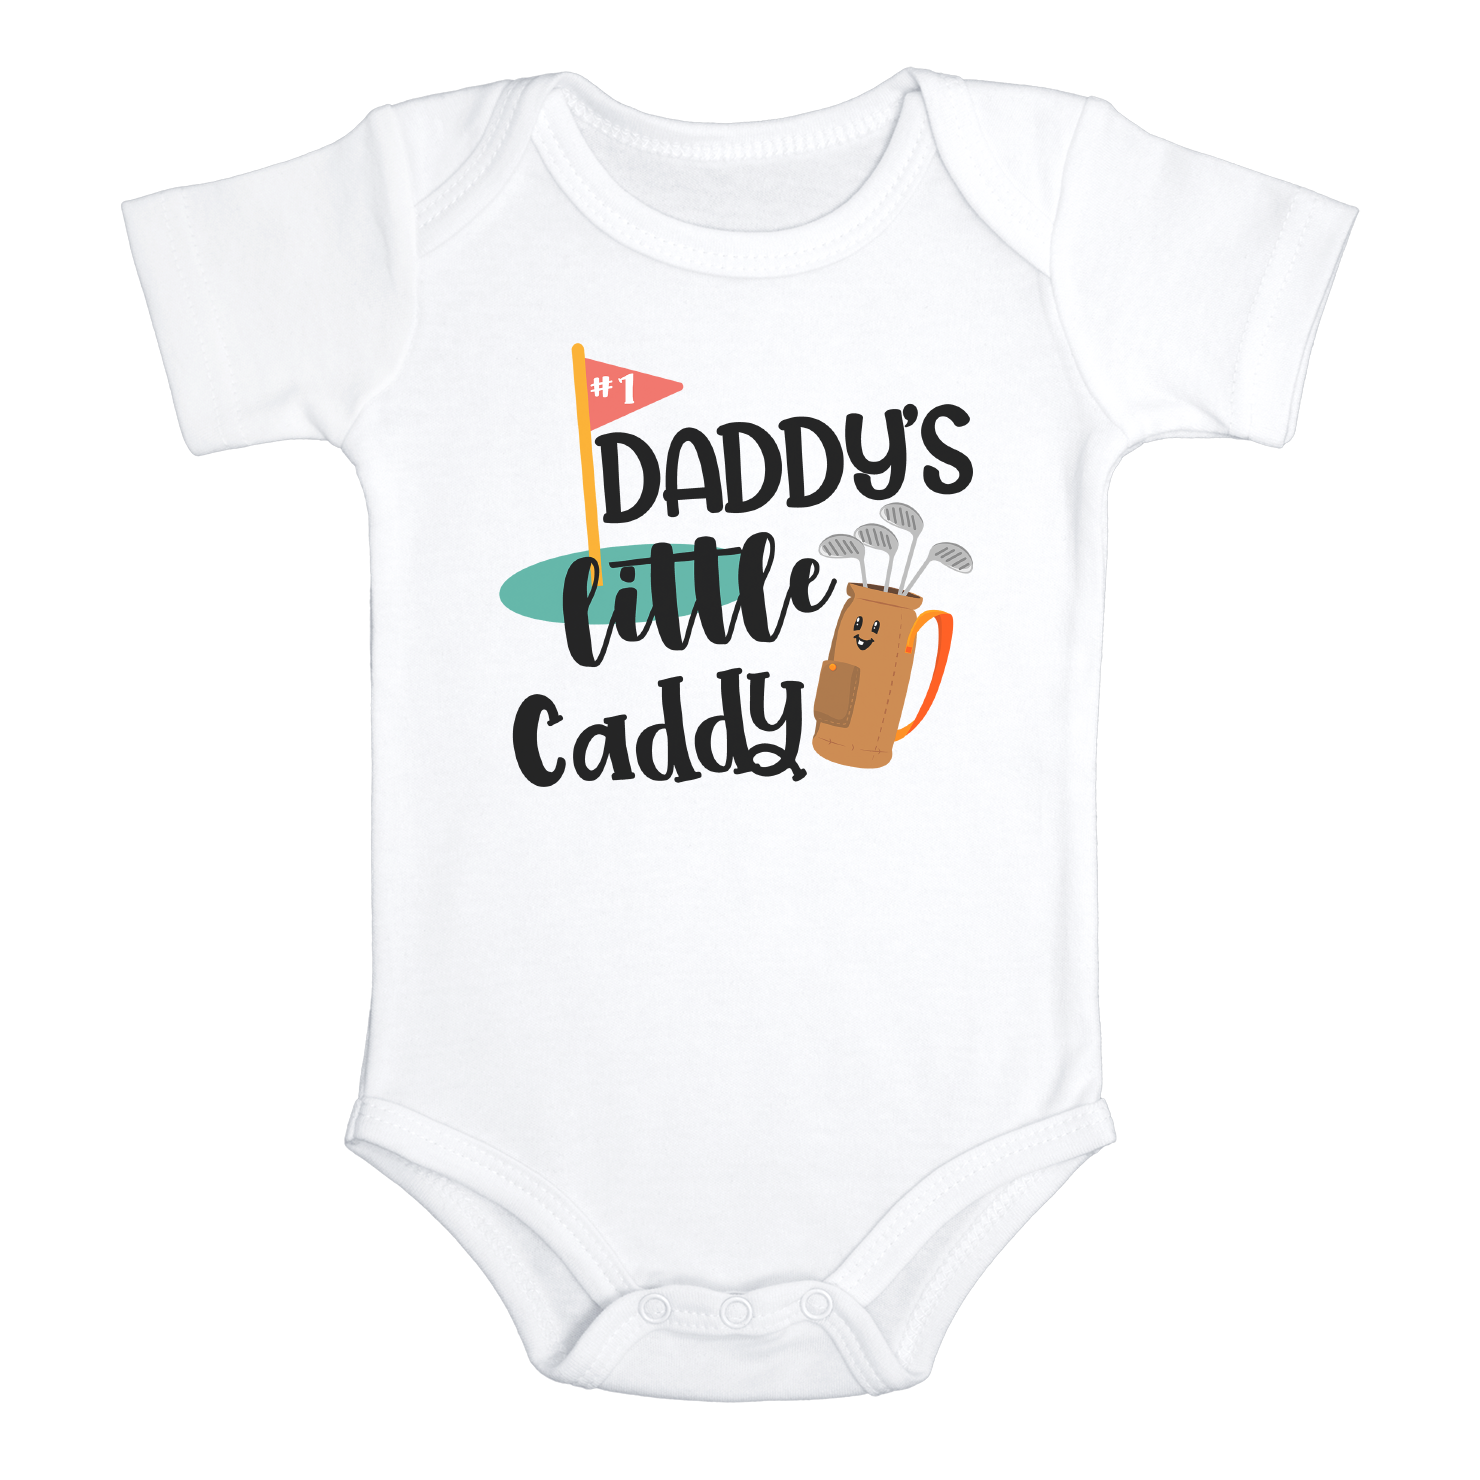 DADDY'S LITTLE CADDY Funny Baby Bodysuit Cute Golf Onesie White